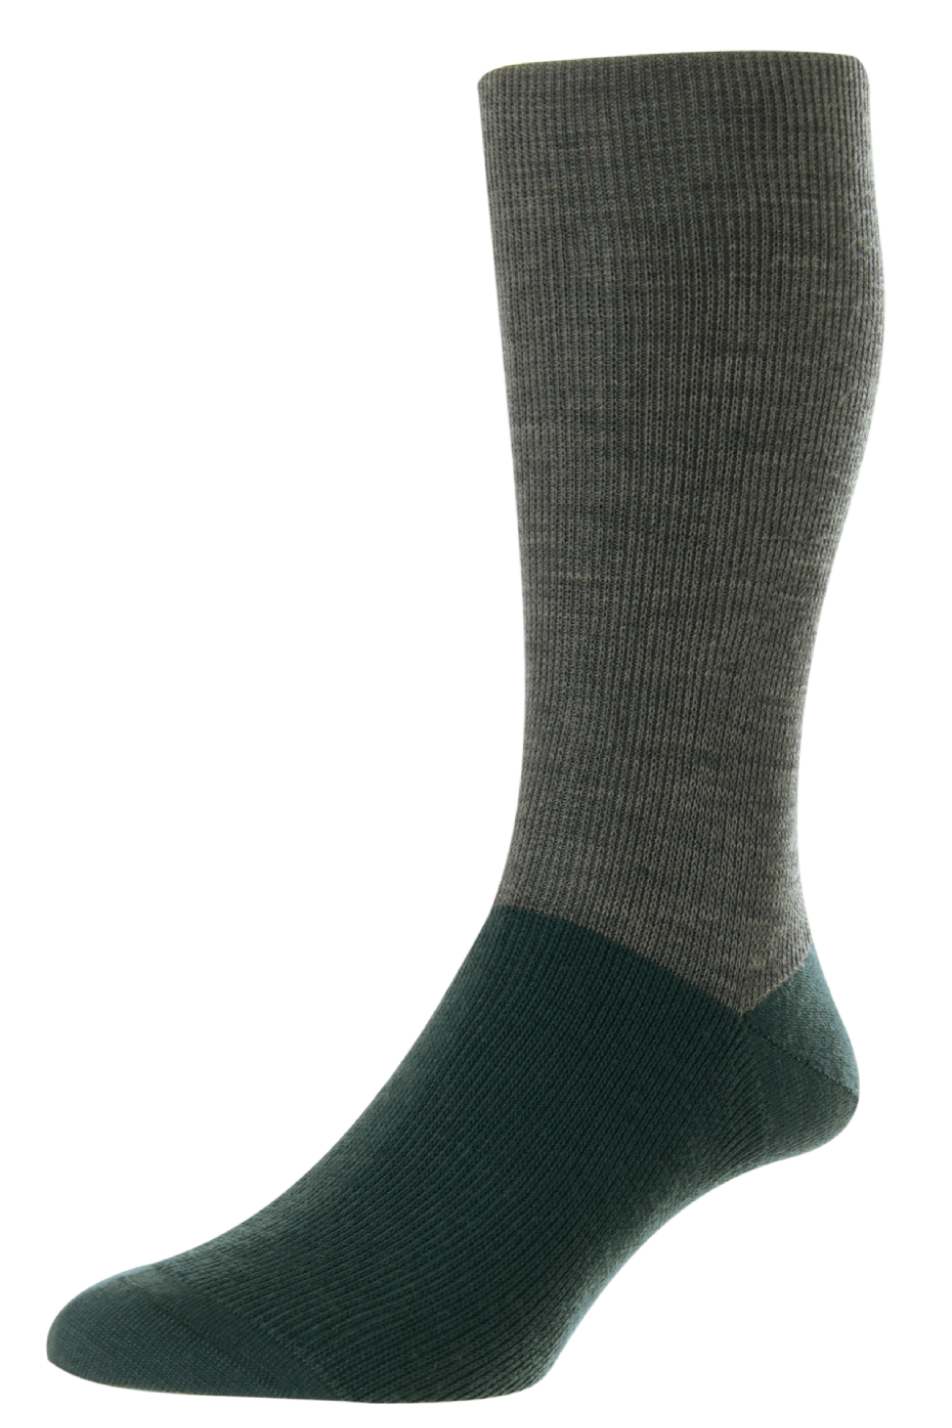 Pantherella Men's Edale Colour Block Sock